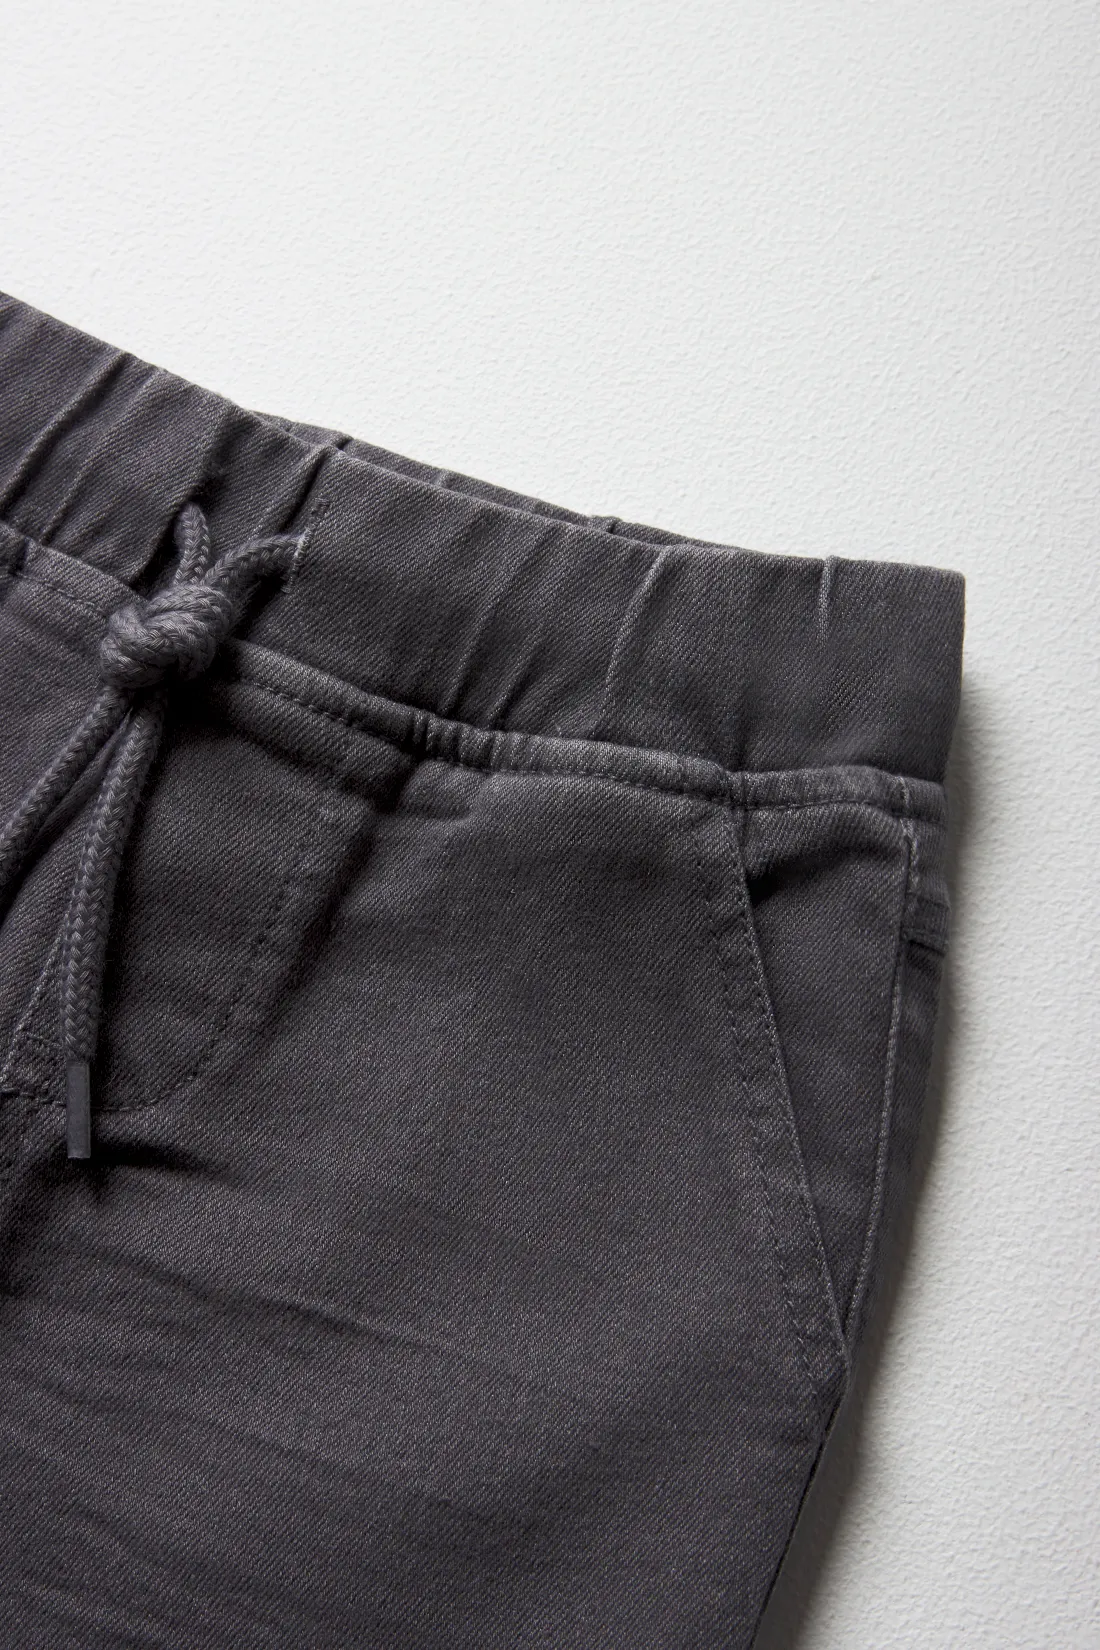 Pull on denim shorts dark grey - BOYS 2-8 YEARS Bottoms & Jeans | Ackermans